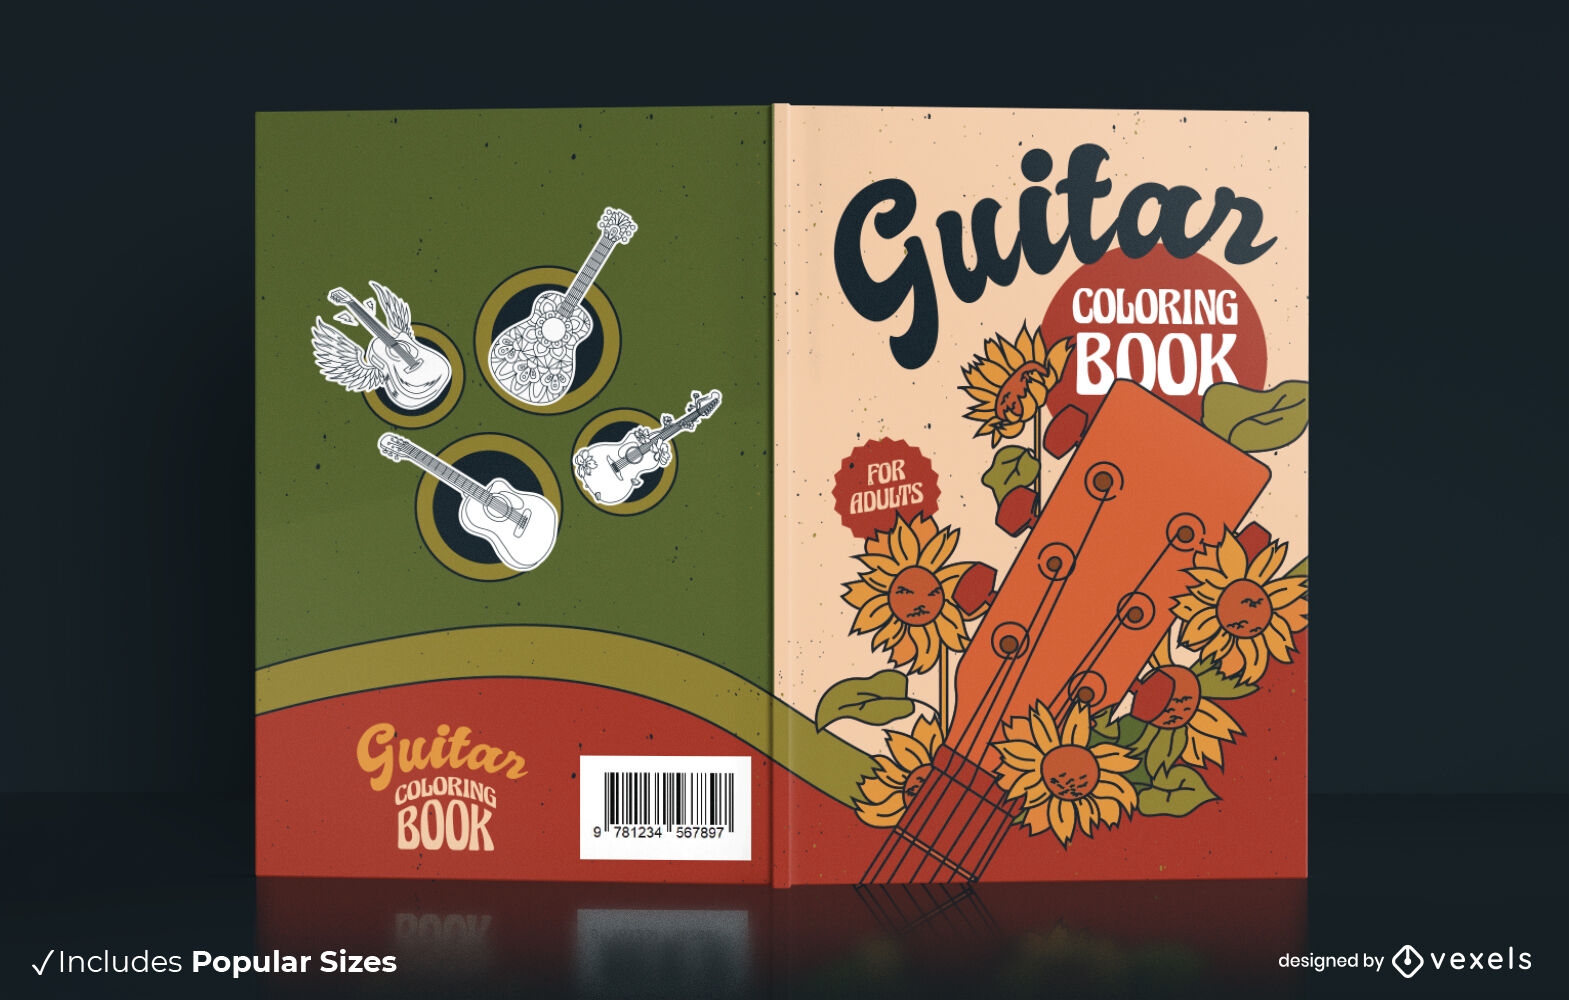 Guitar coloring book cover design